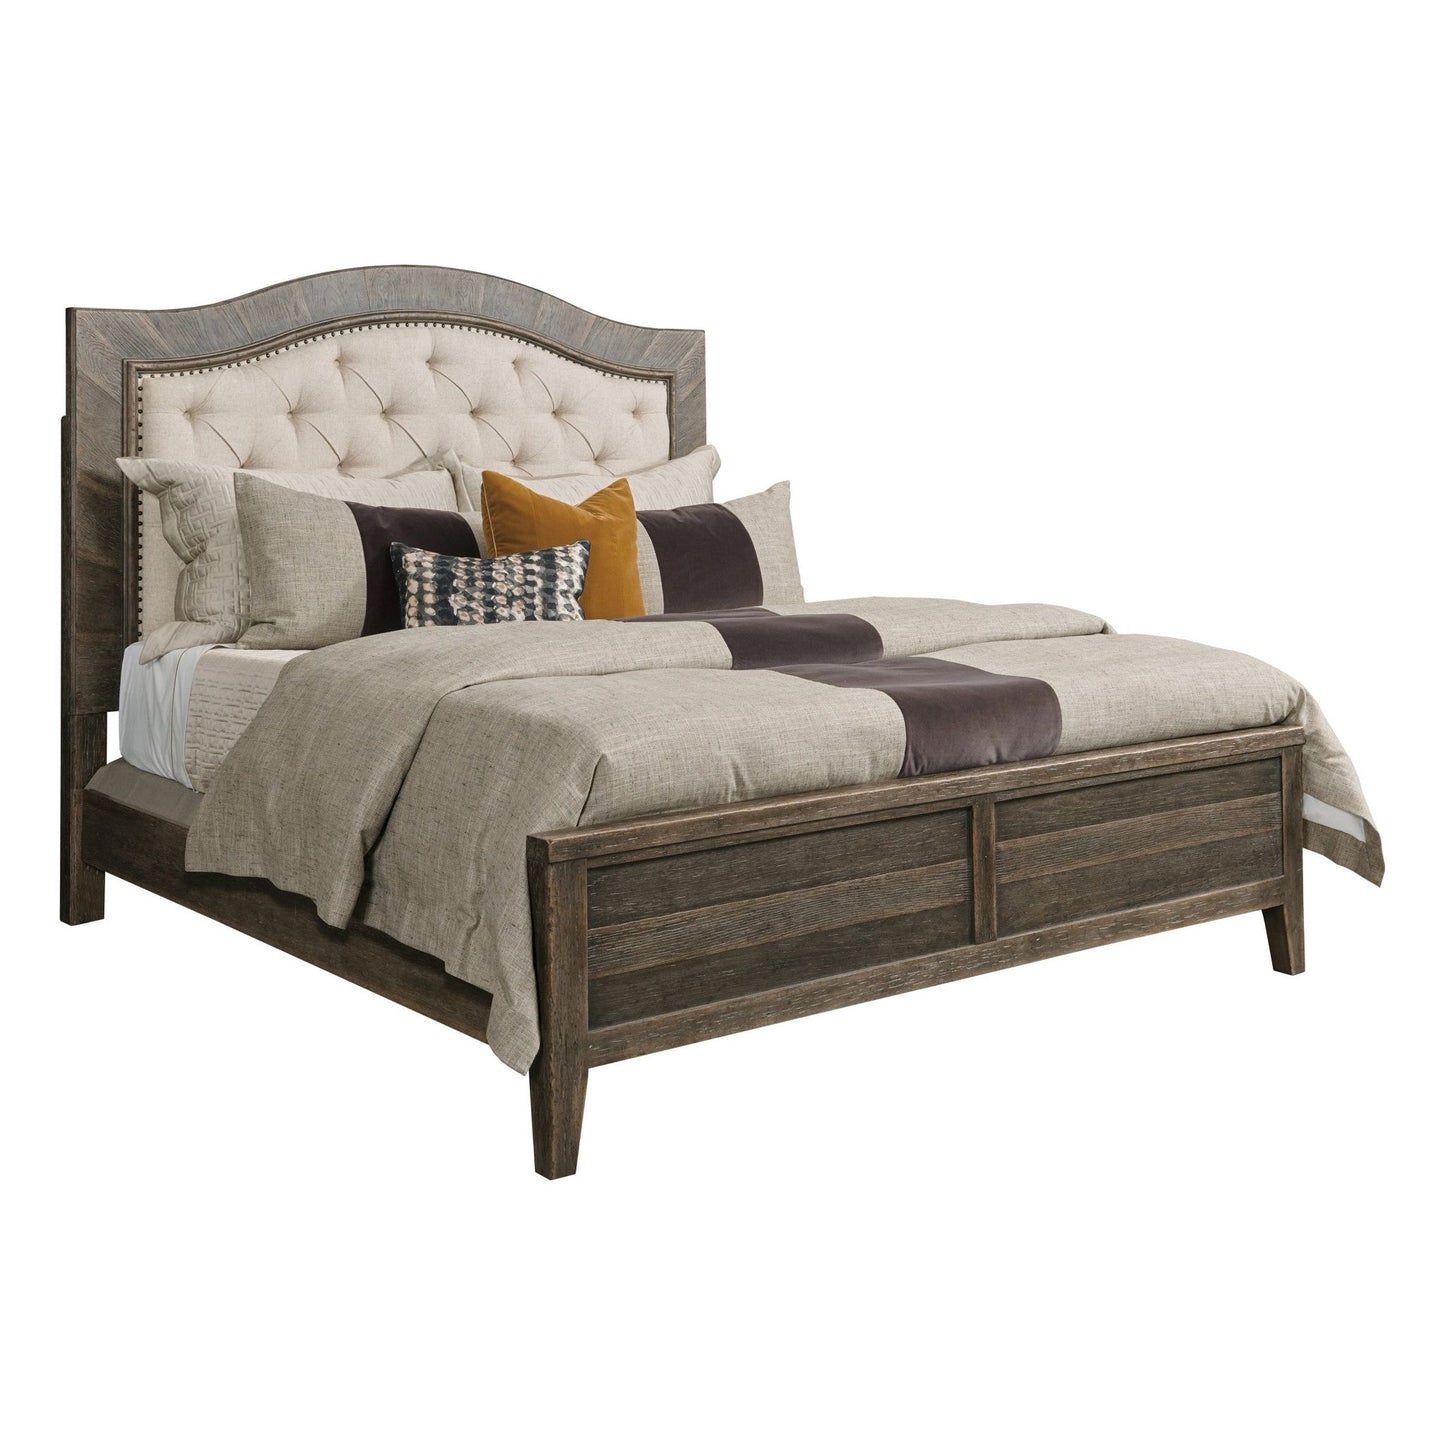 Ingram Upholstered Queen Bed